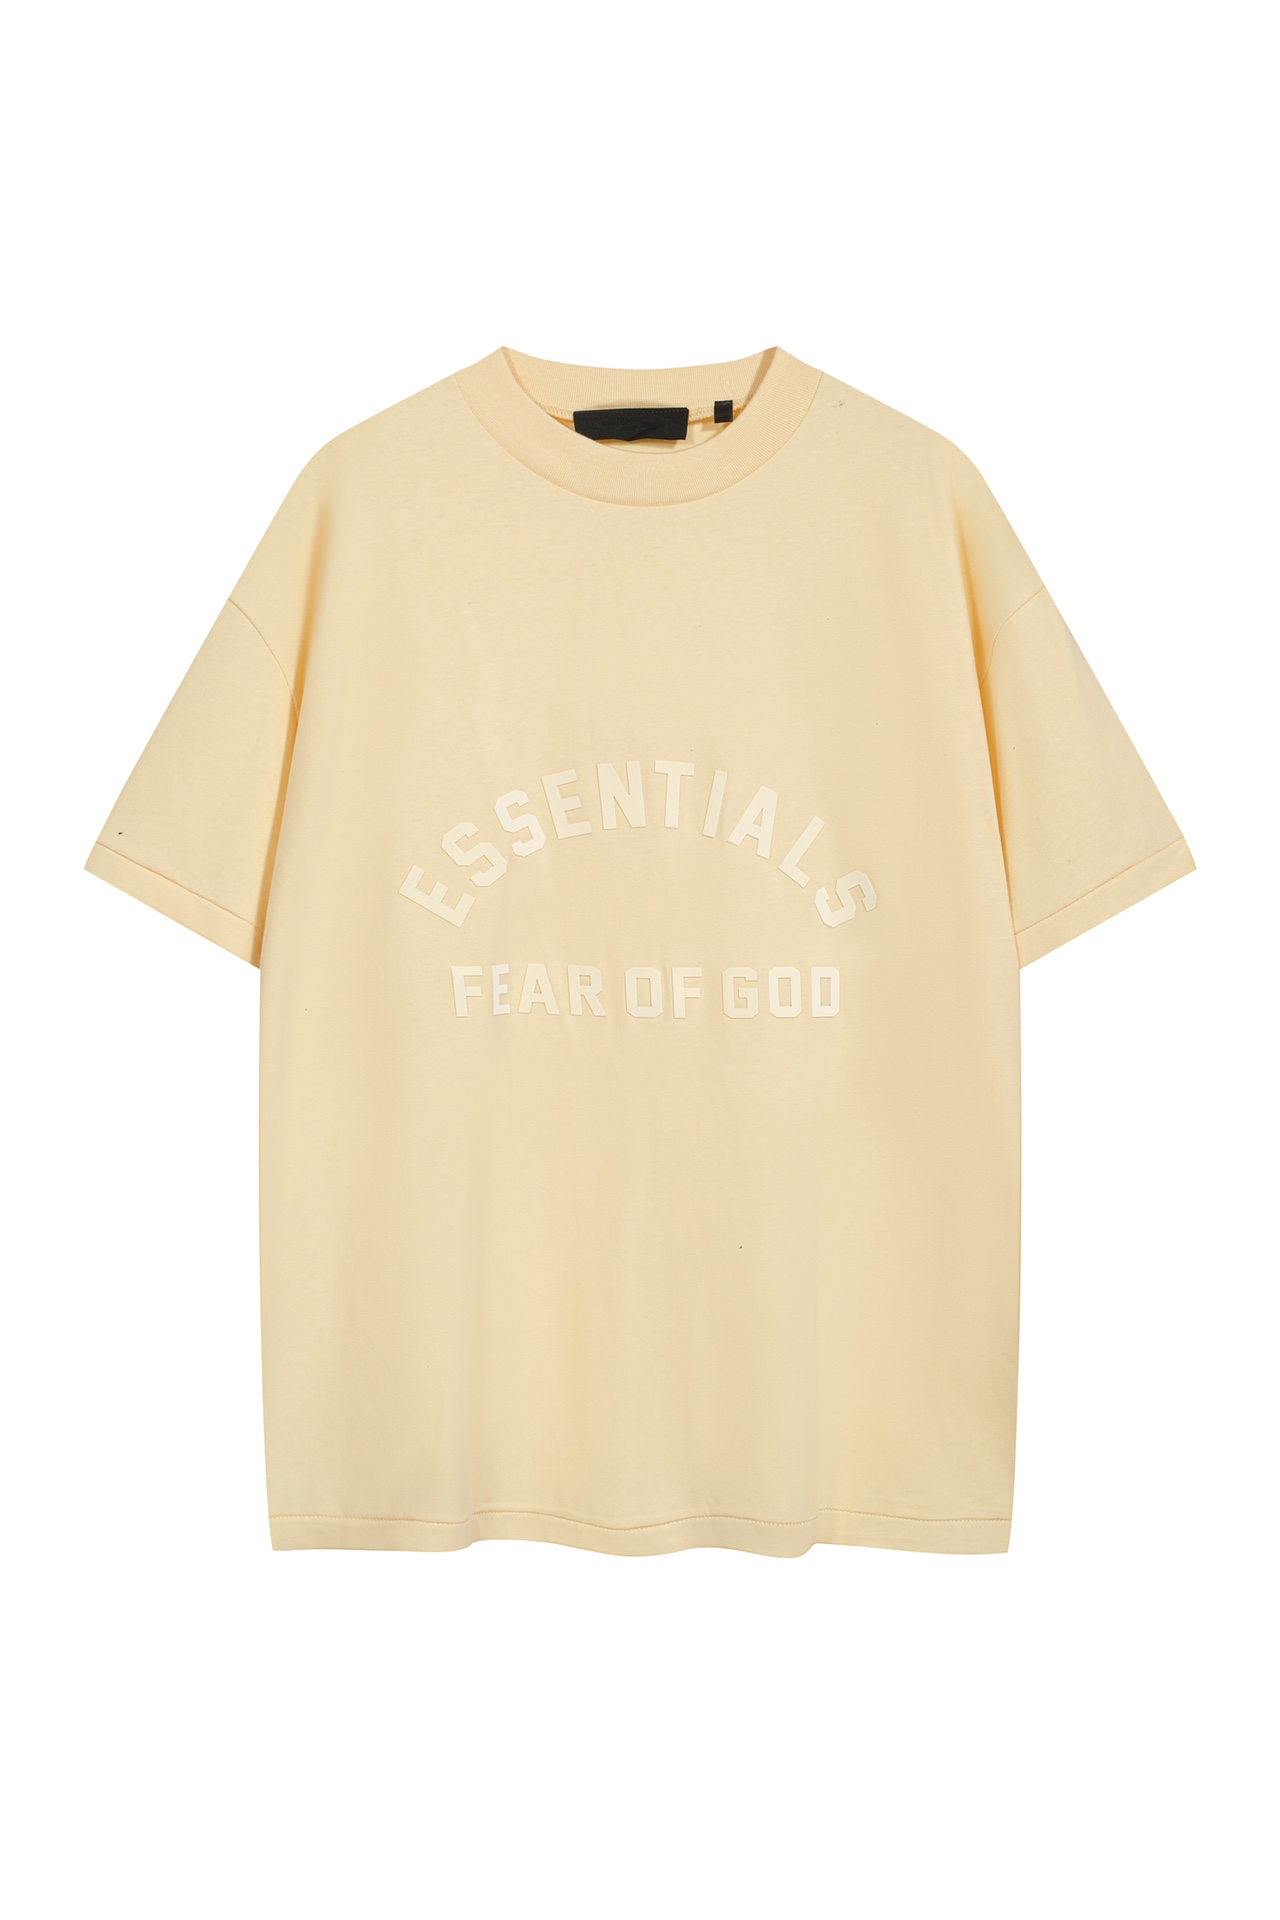 ESSENTIALS Kleidung T-Shirt Schwarz Braun Grau Gelb Frühlingskollektion Essential Kurzarm